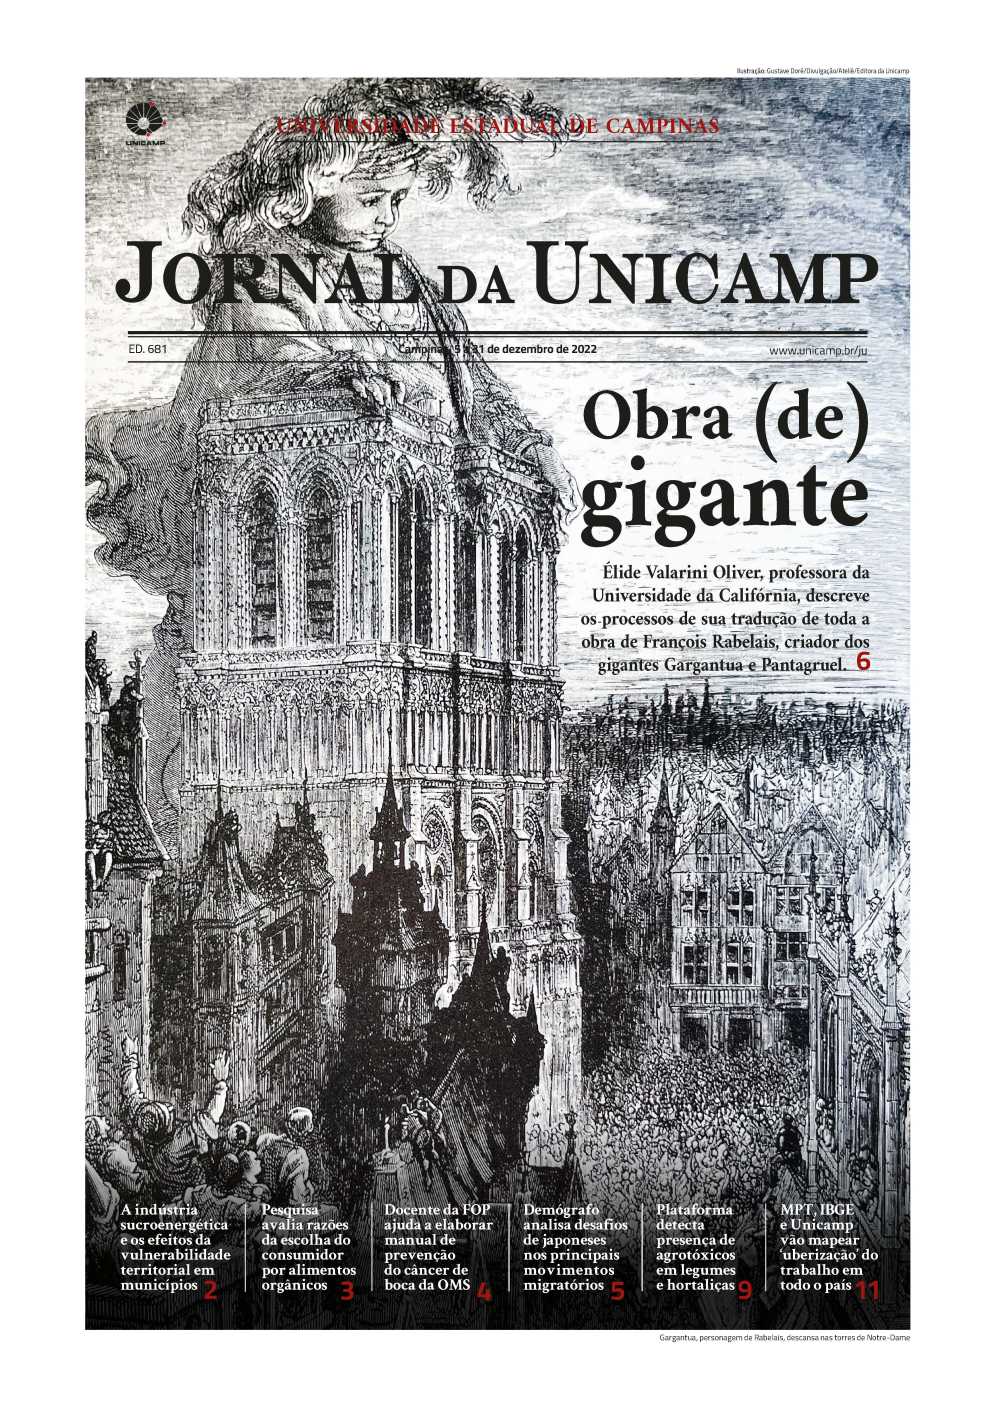 Foto da capa do Jornal da Unicamp